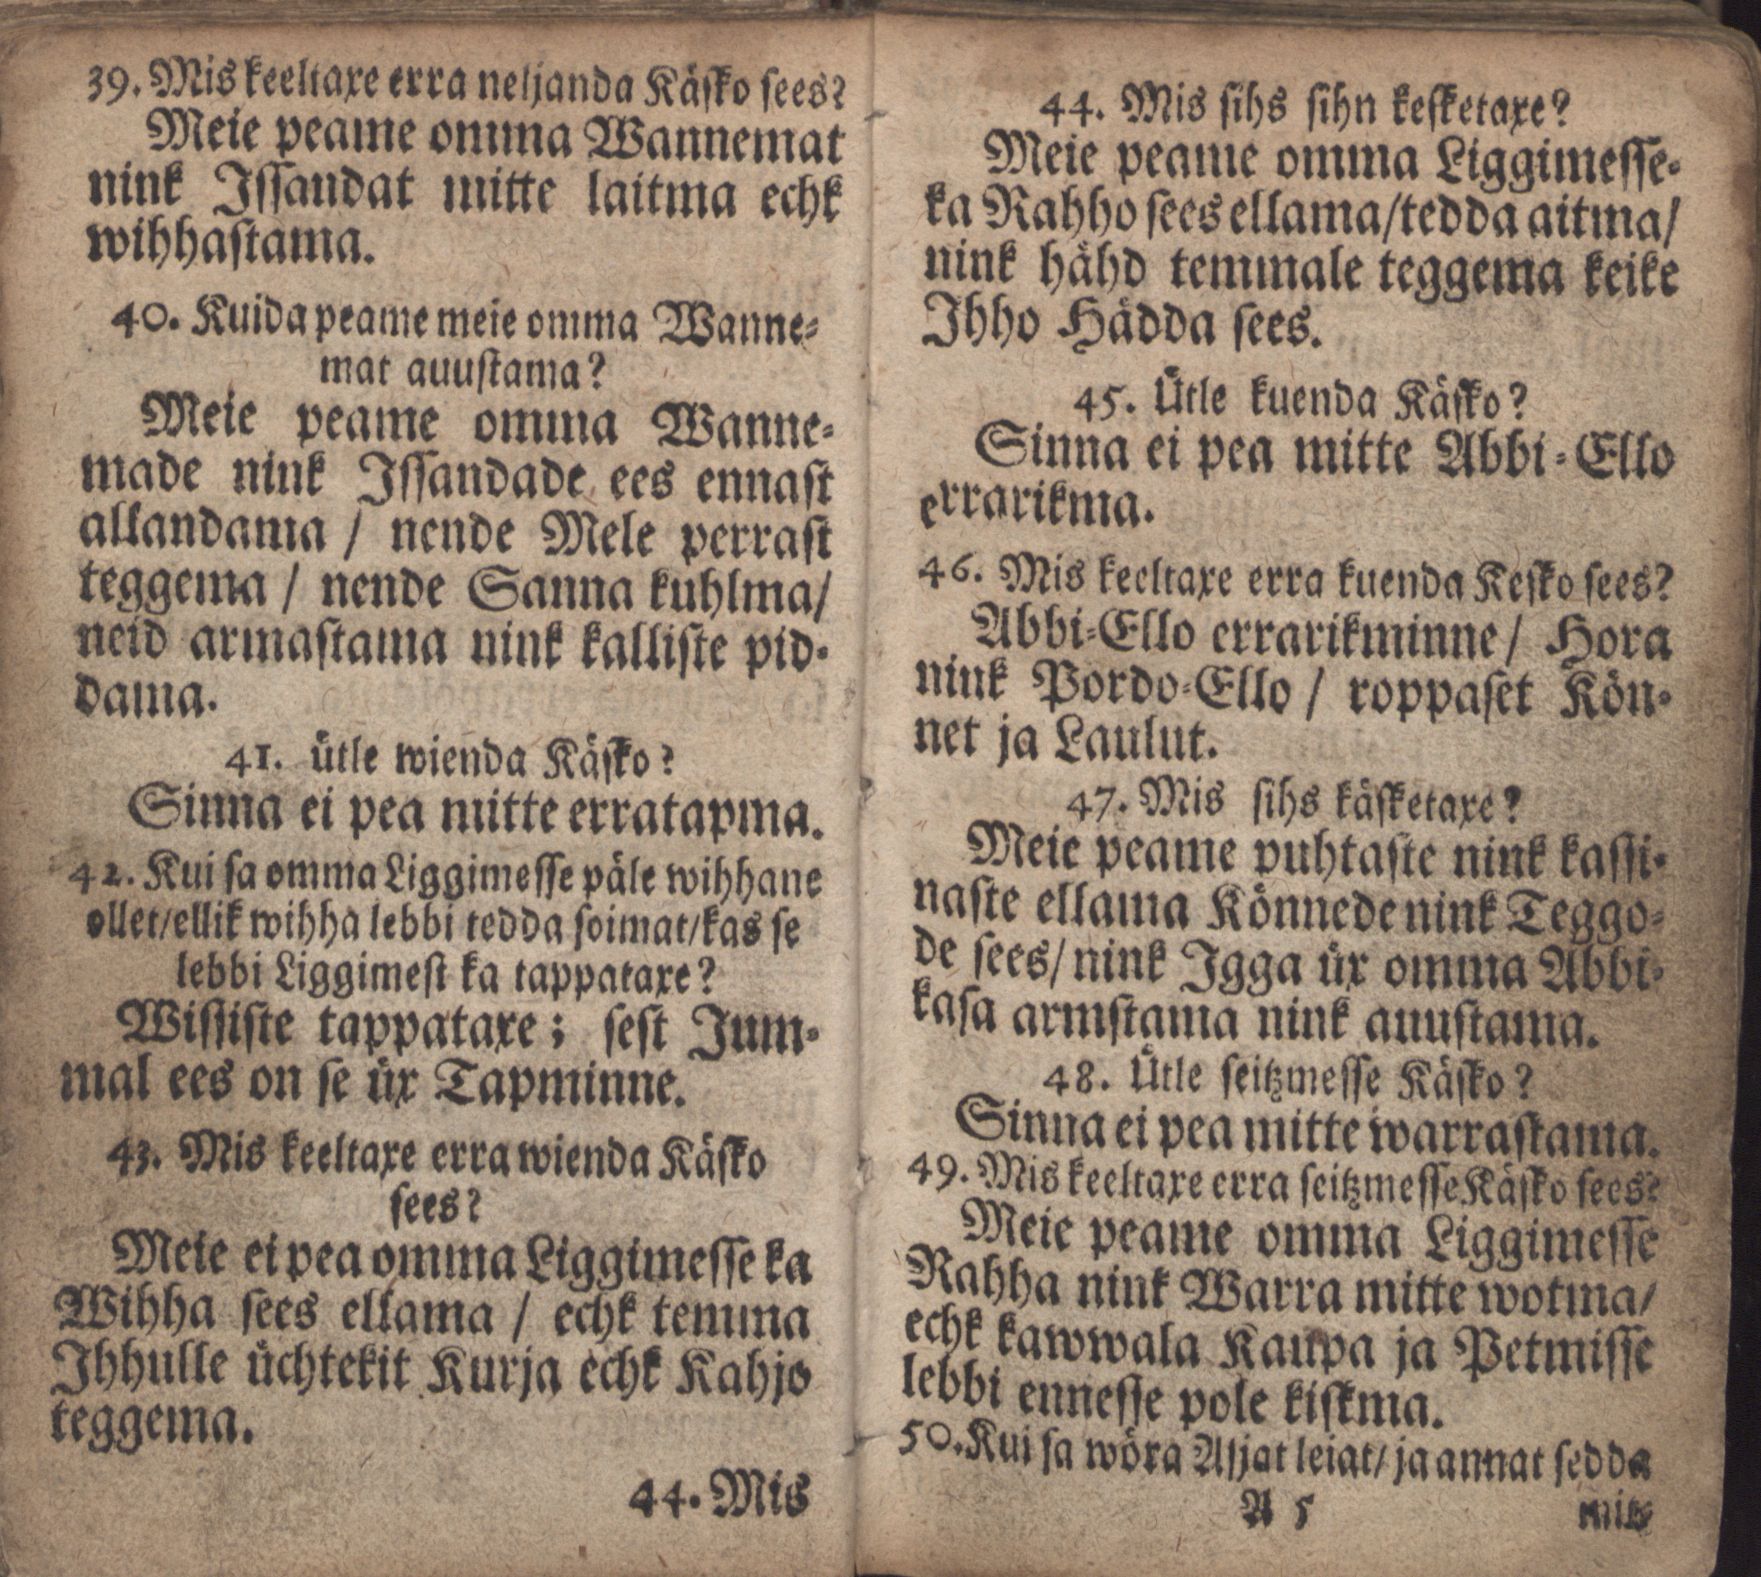 Ma Kele Koddo- nink Kirko-Ramat (1700) | 35. Main body of text